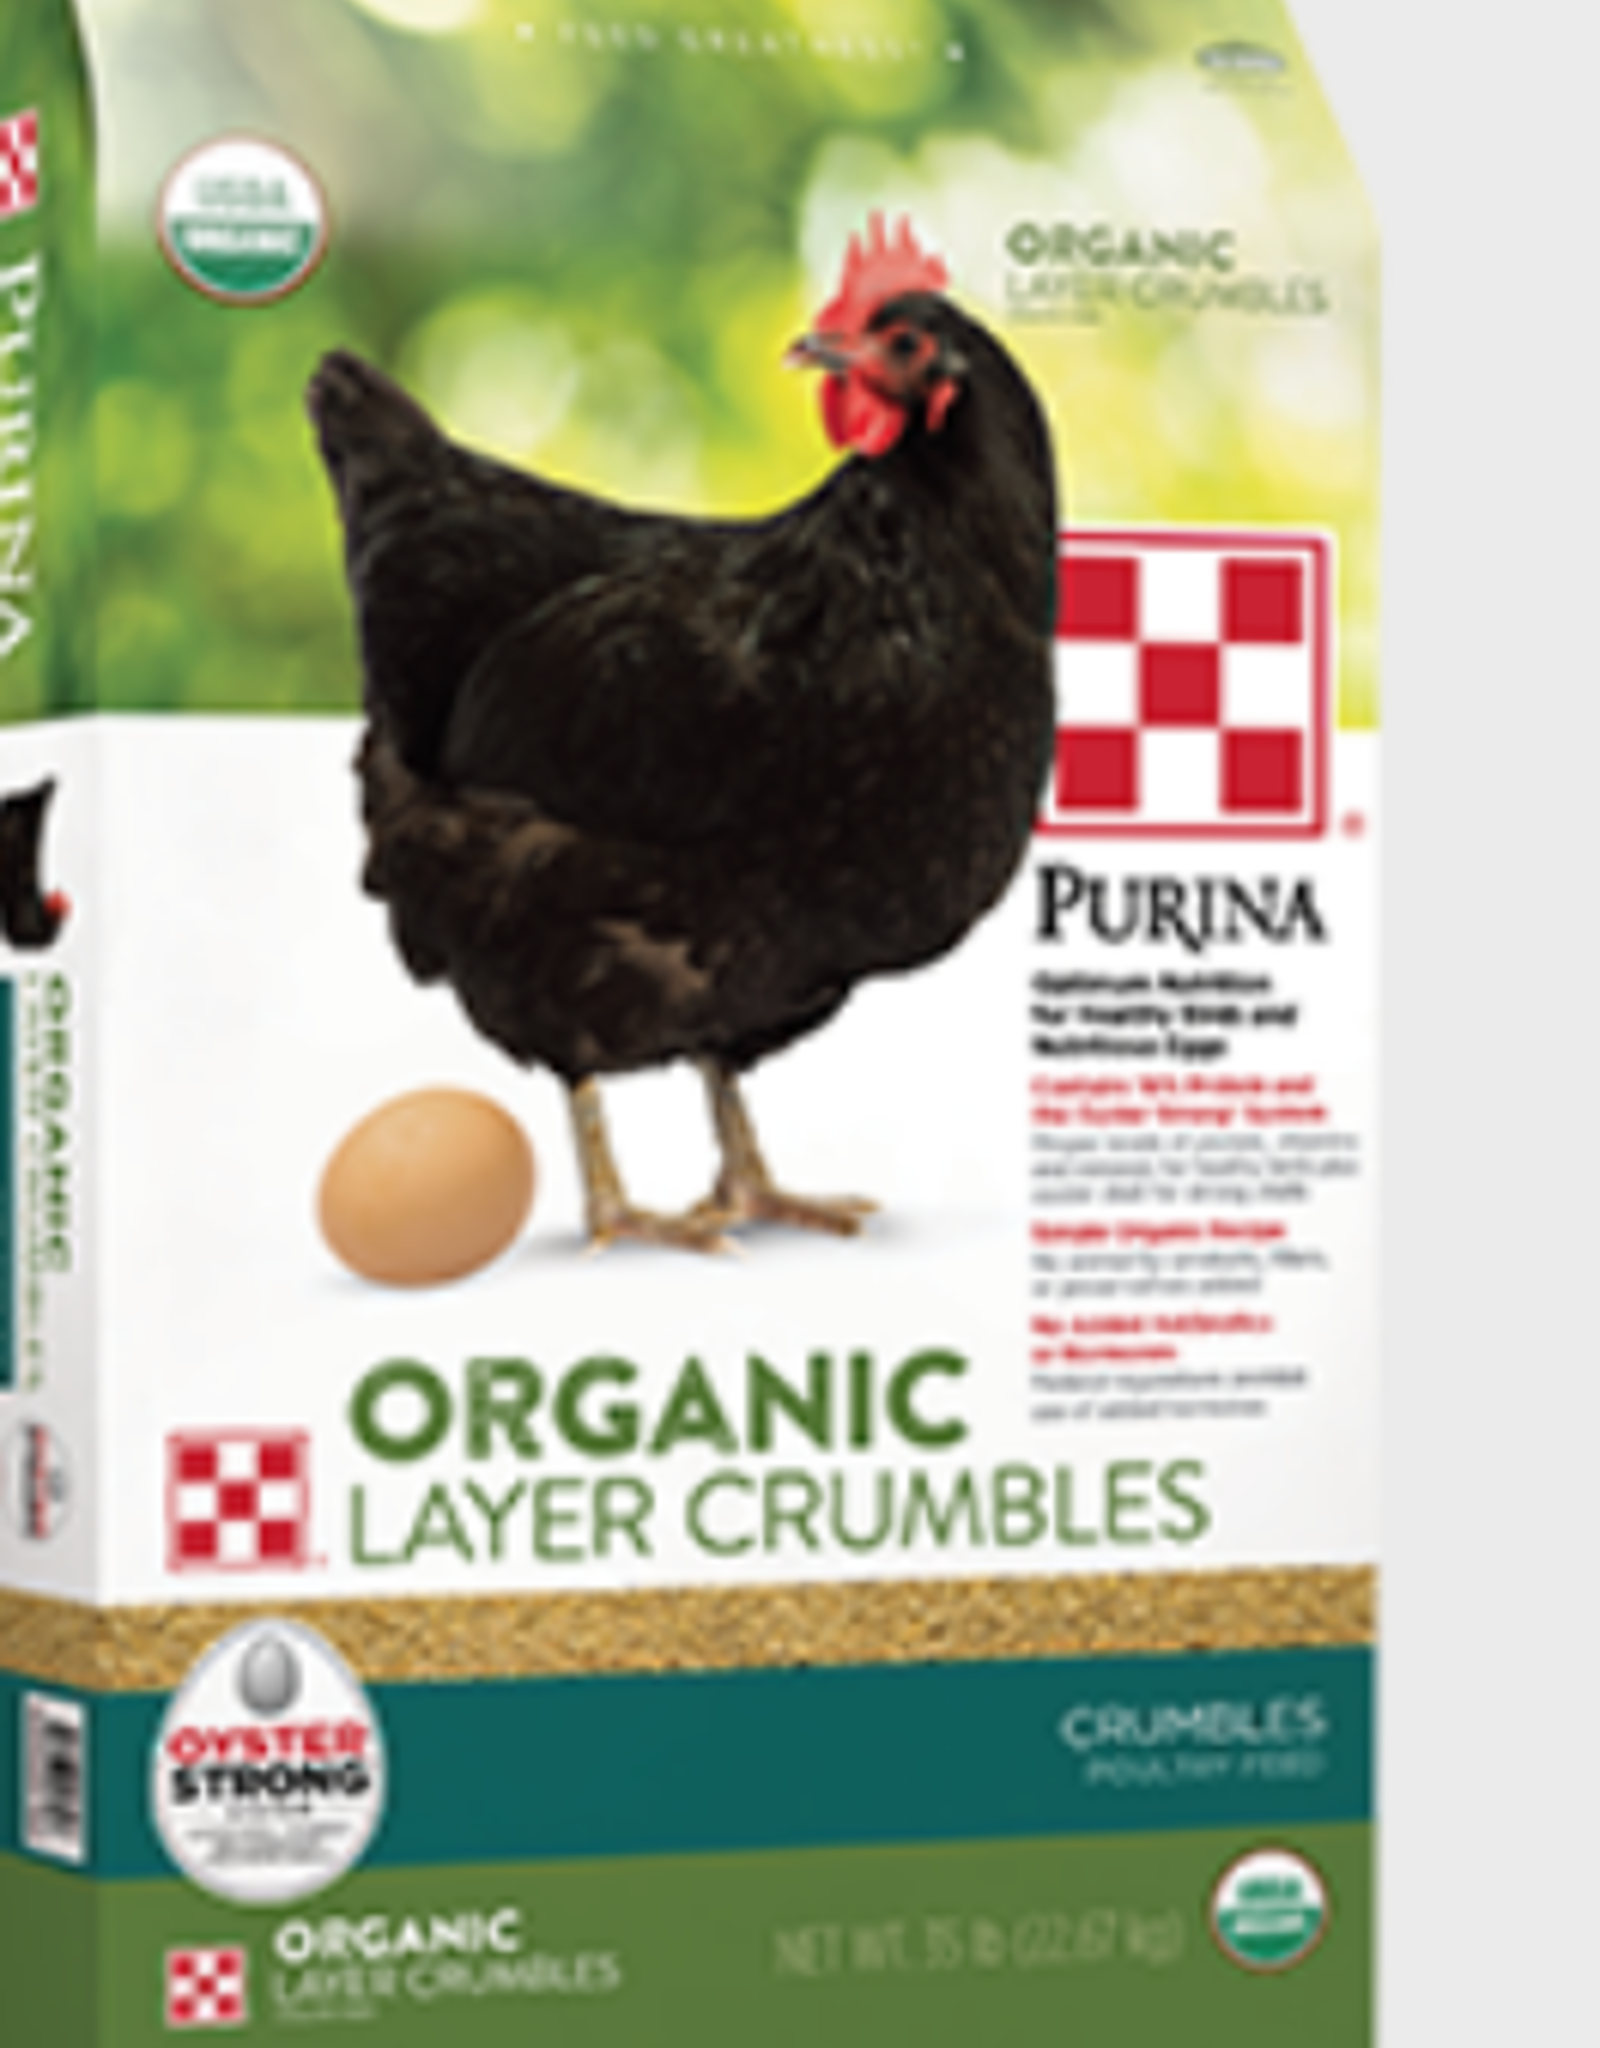 Purina Chickens-Organic Layer Crumbles